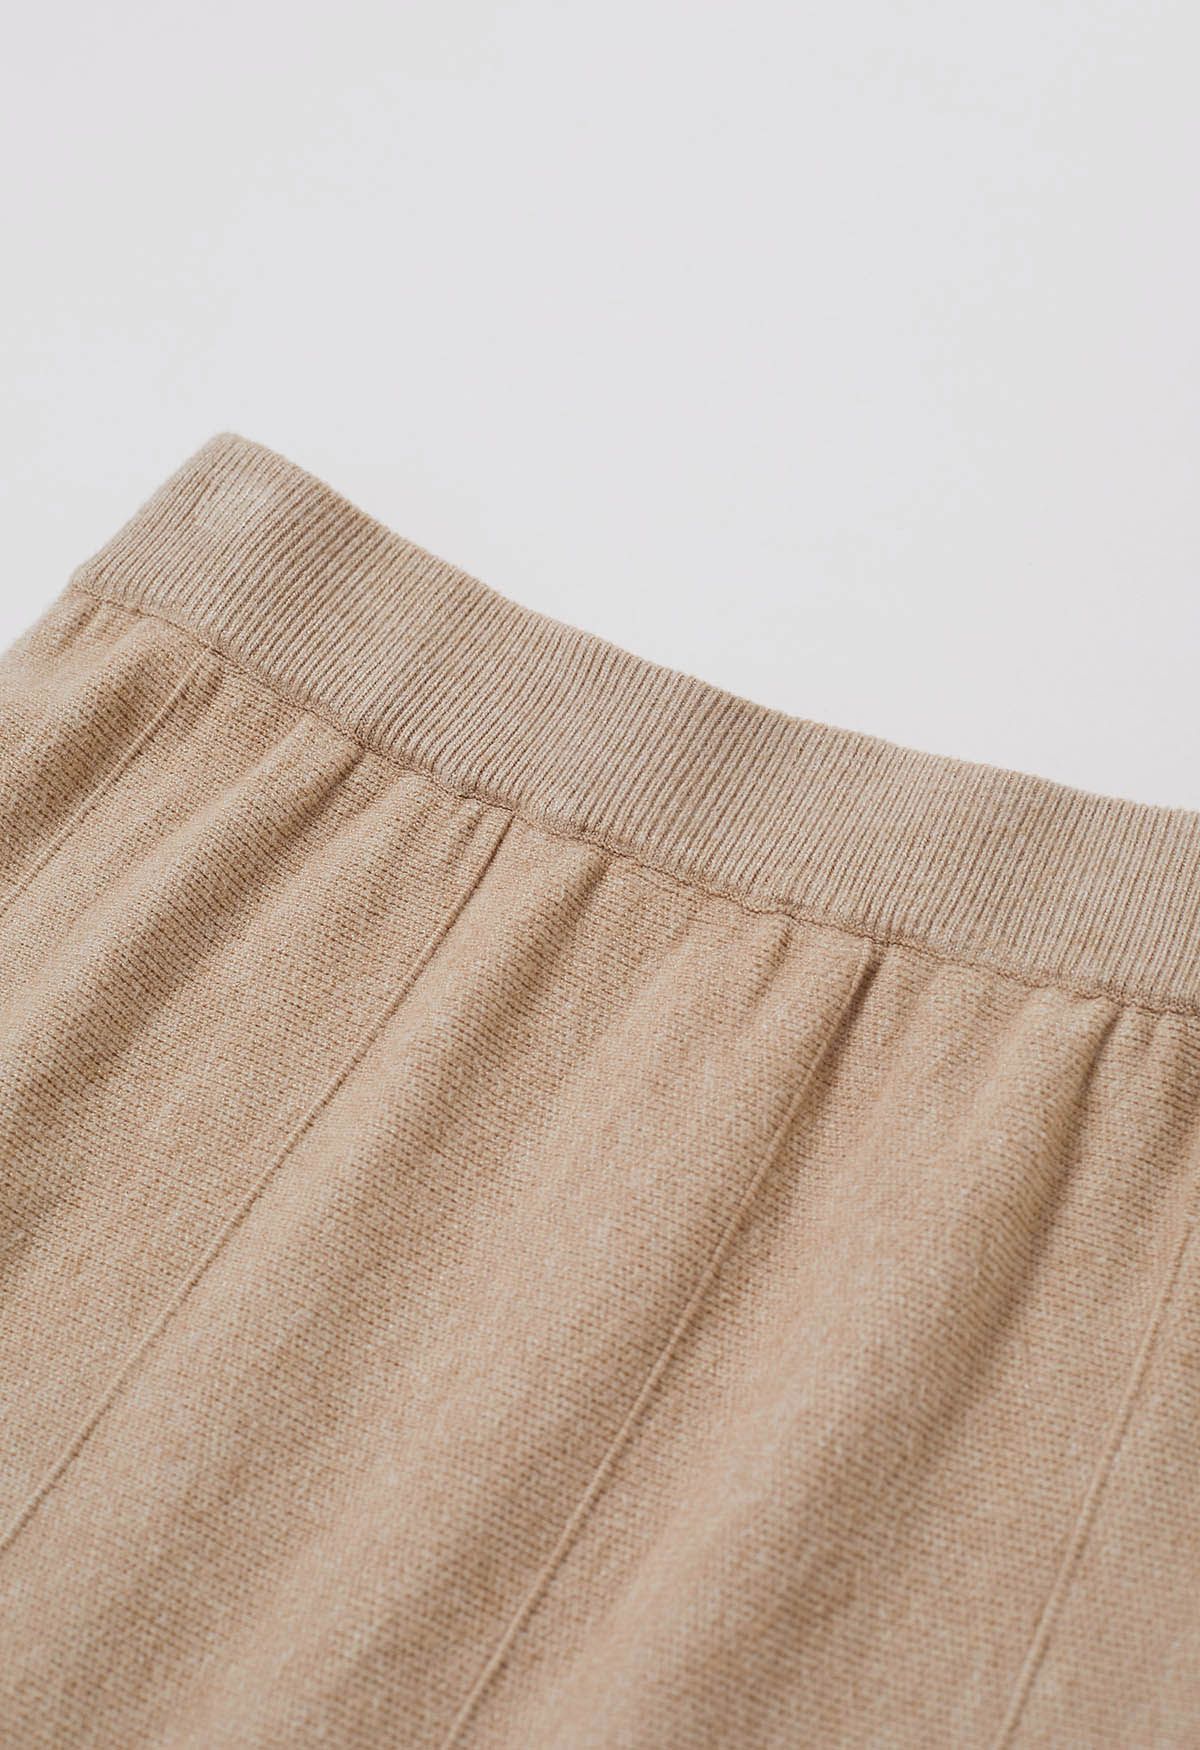 Frilling Hem Knit Midi Skirt in Light Tan